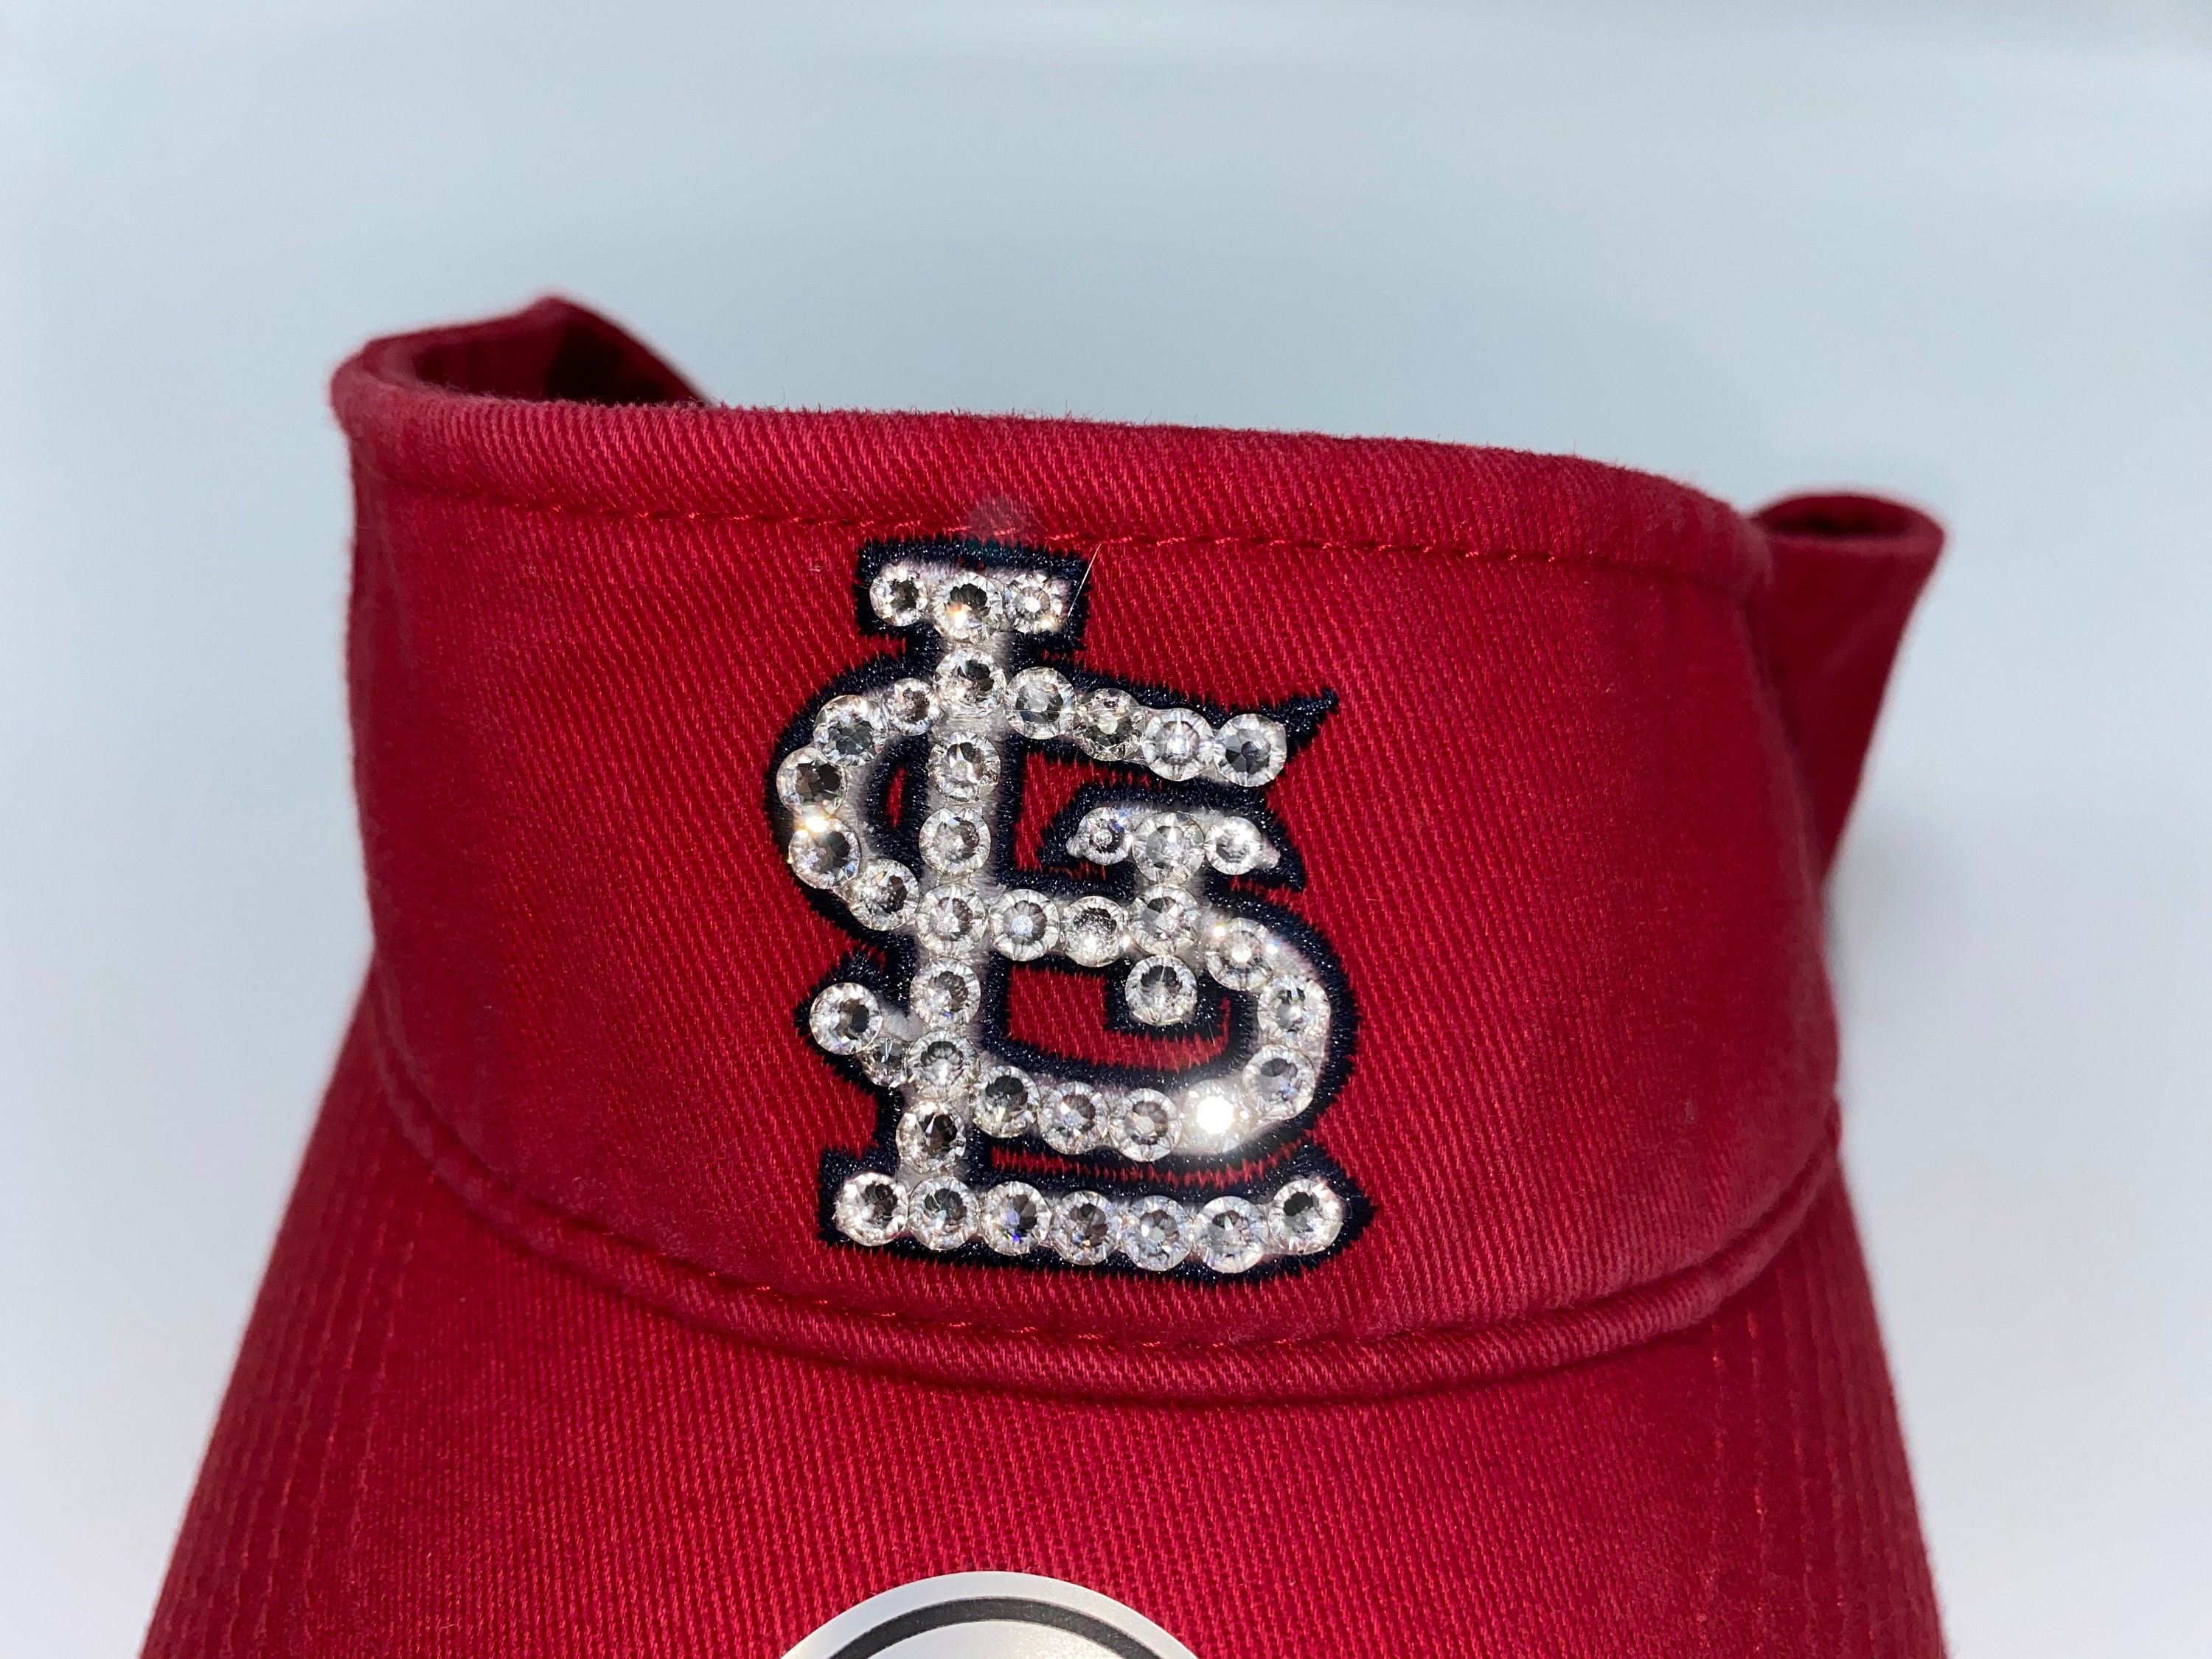 Red STL Cardinals Pride Bling Hat Austrian Crystal Hats 